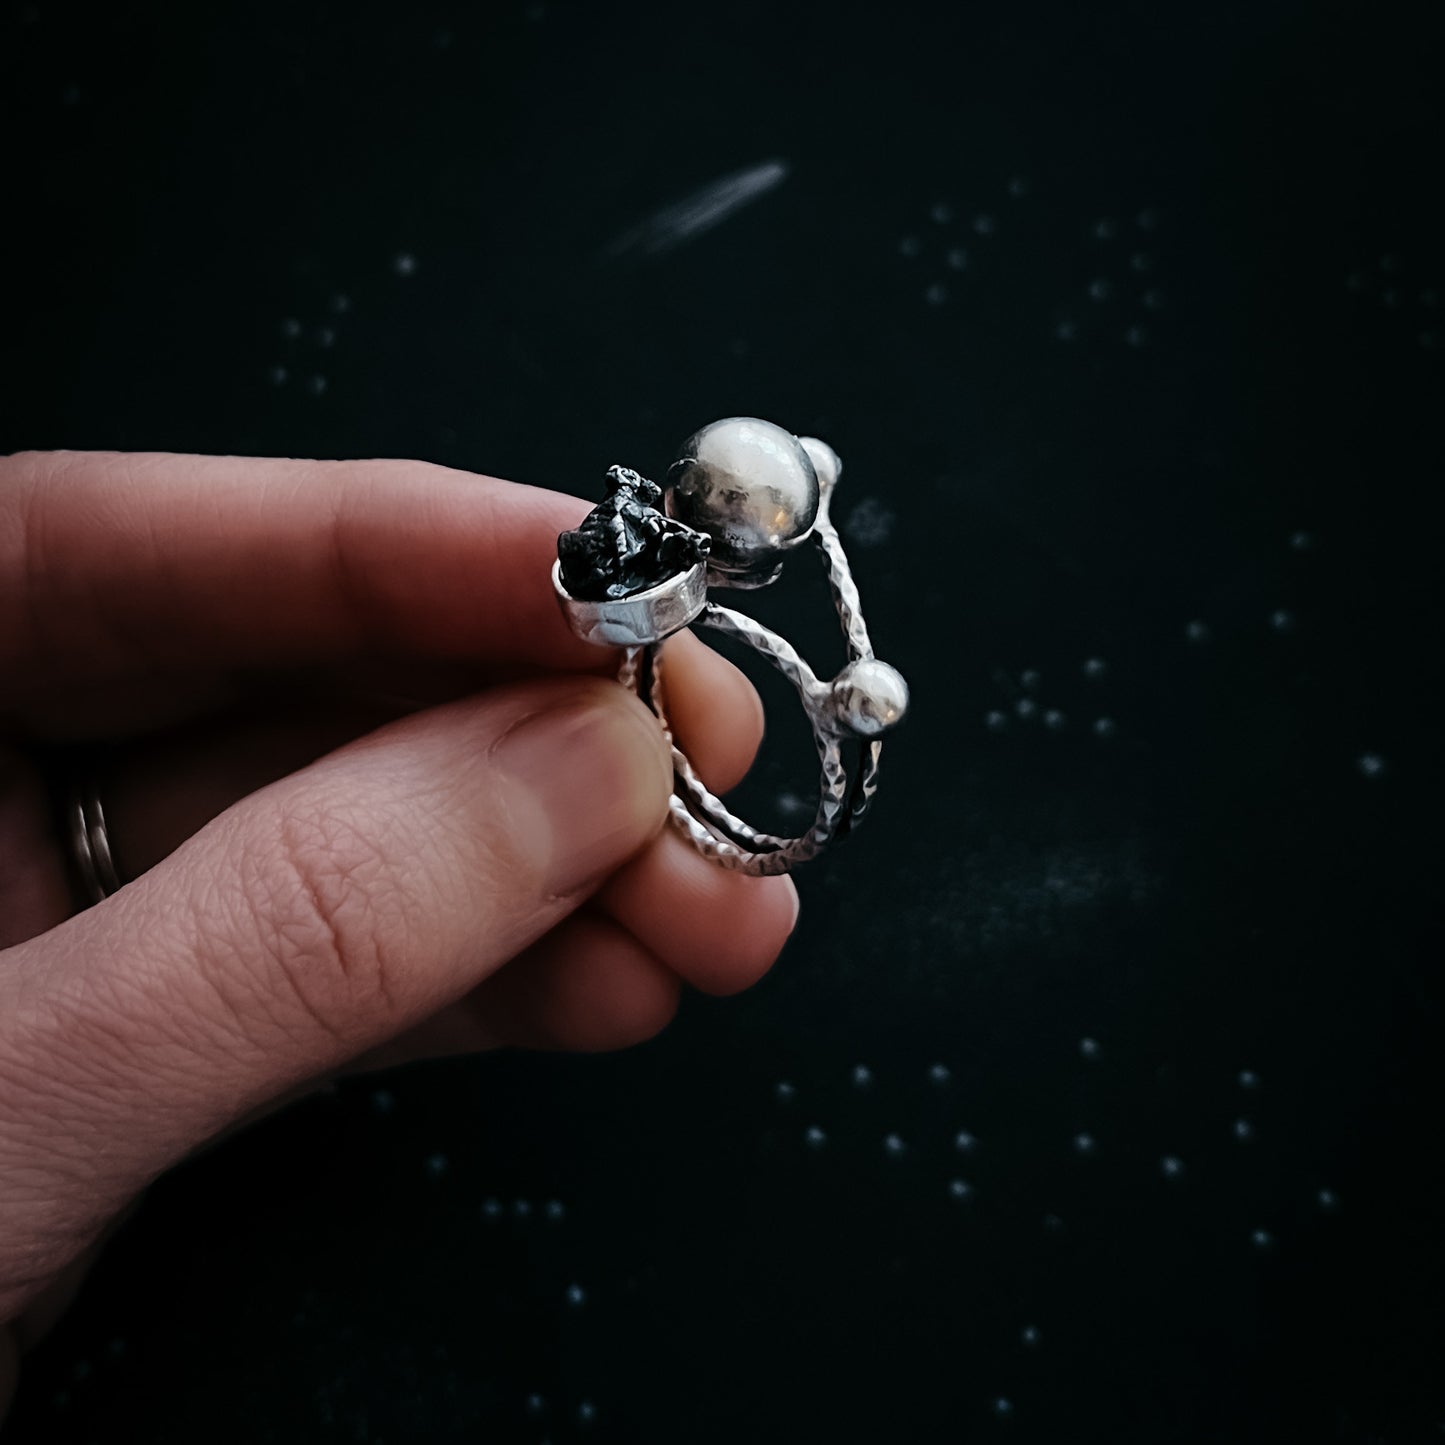 Orbiting Cosmic Bodies Ring with Authentic Meteorite Ring Yugen Handmade   